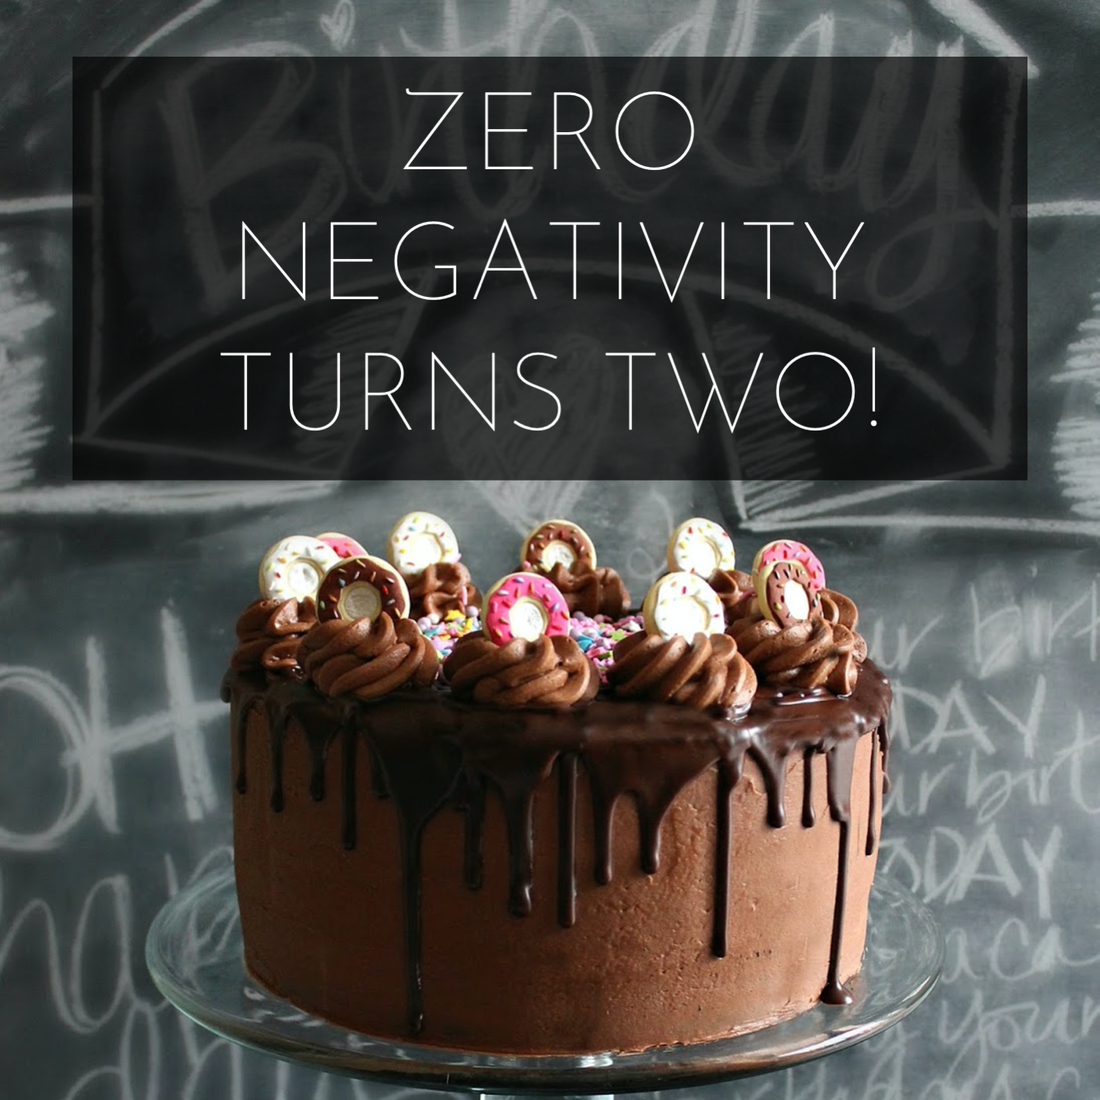 Zero Negativity Turns Two!